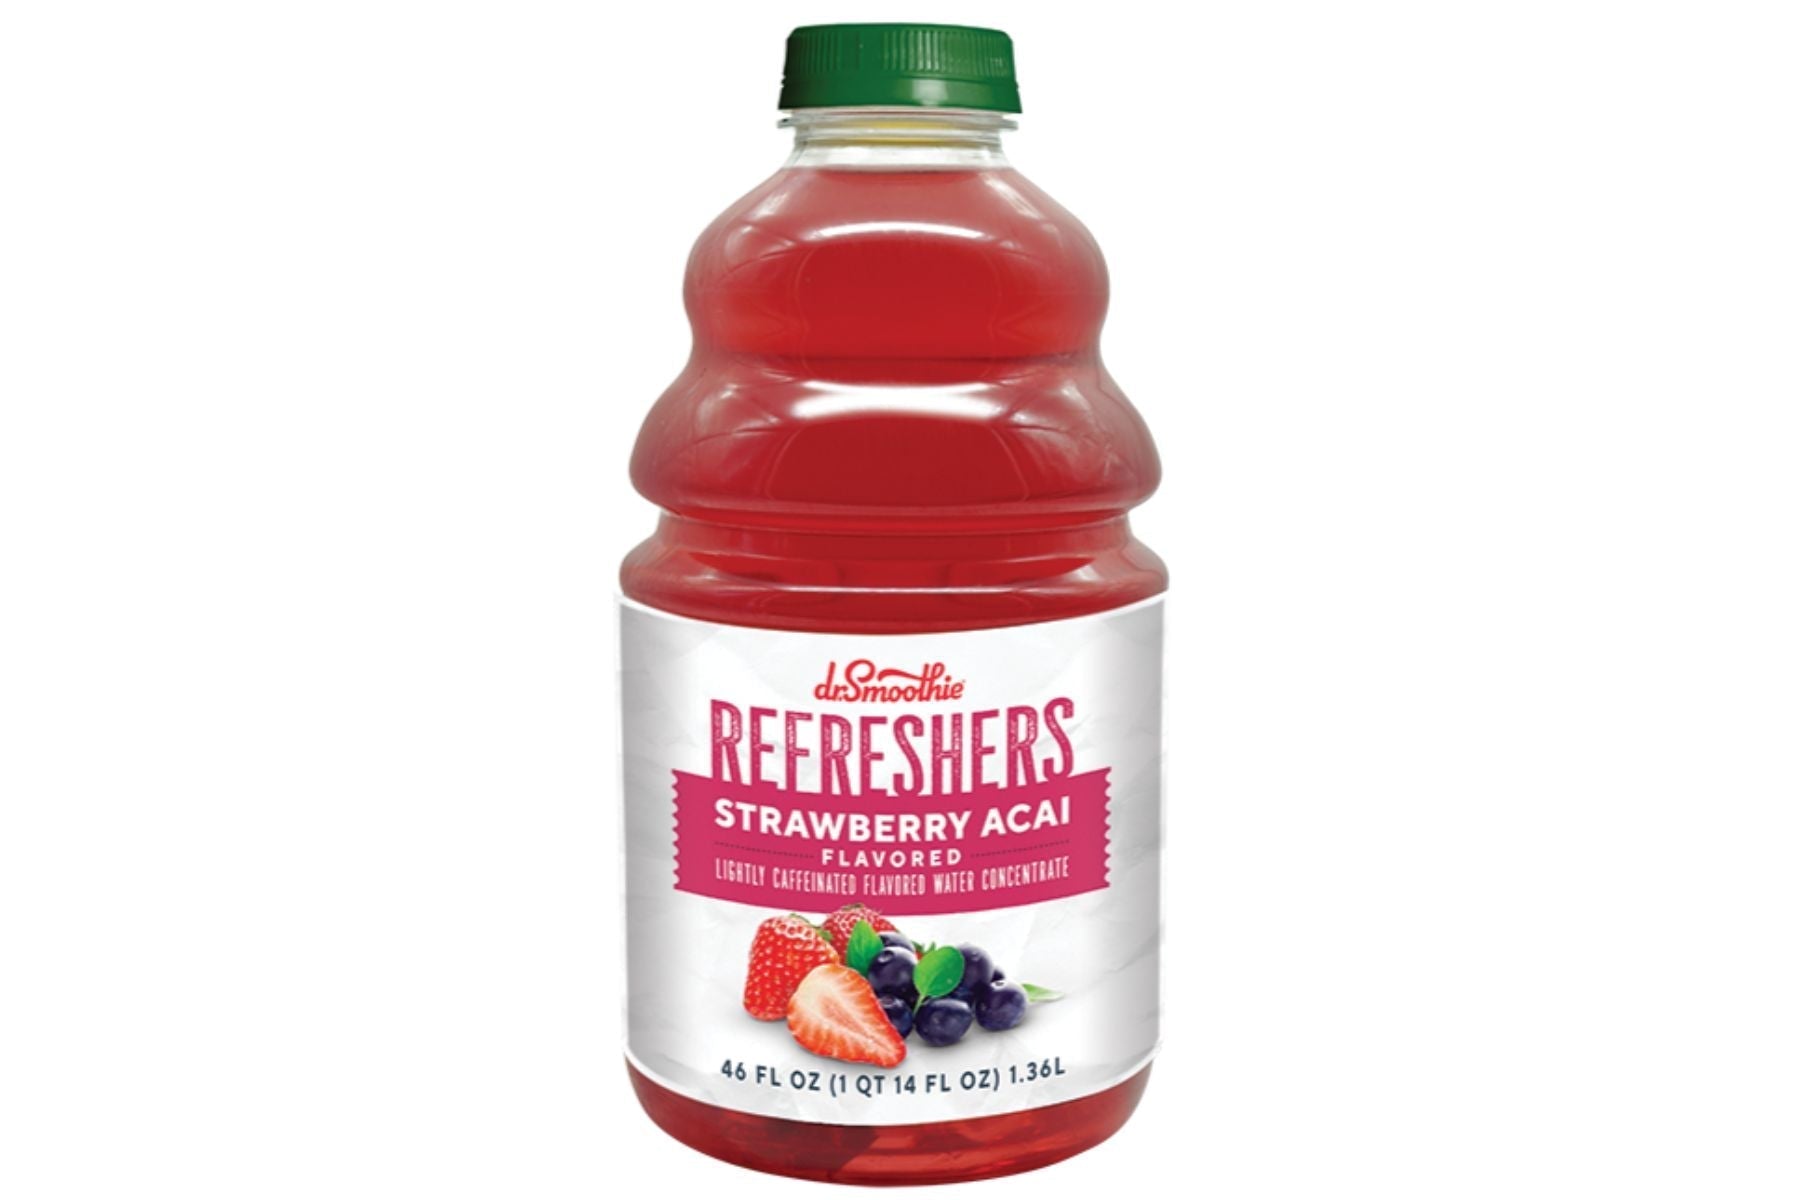 Dr. Smoothie Refreshers Strawberry Acai